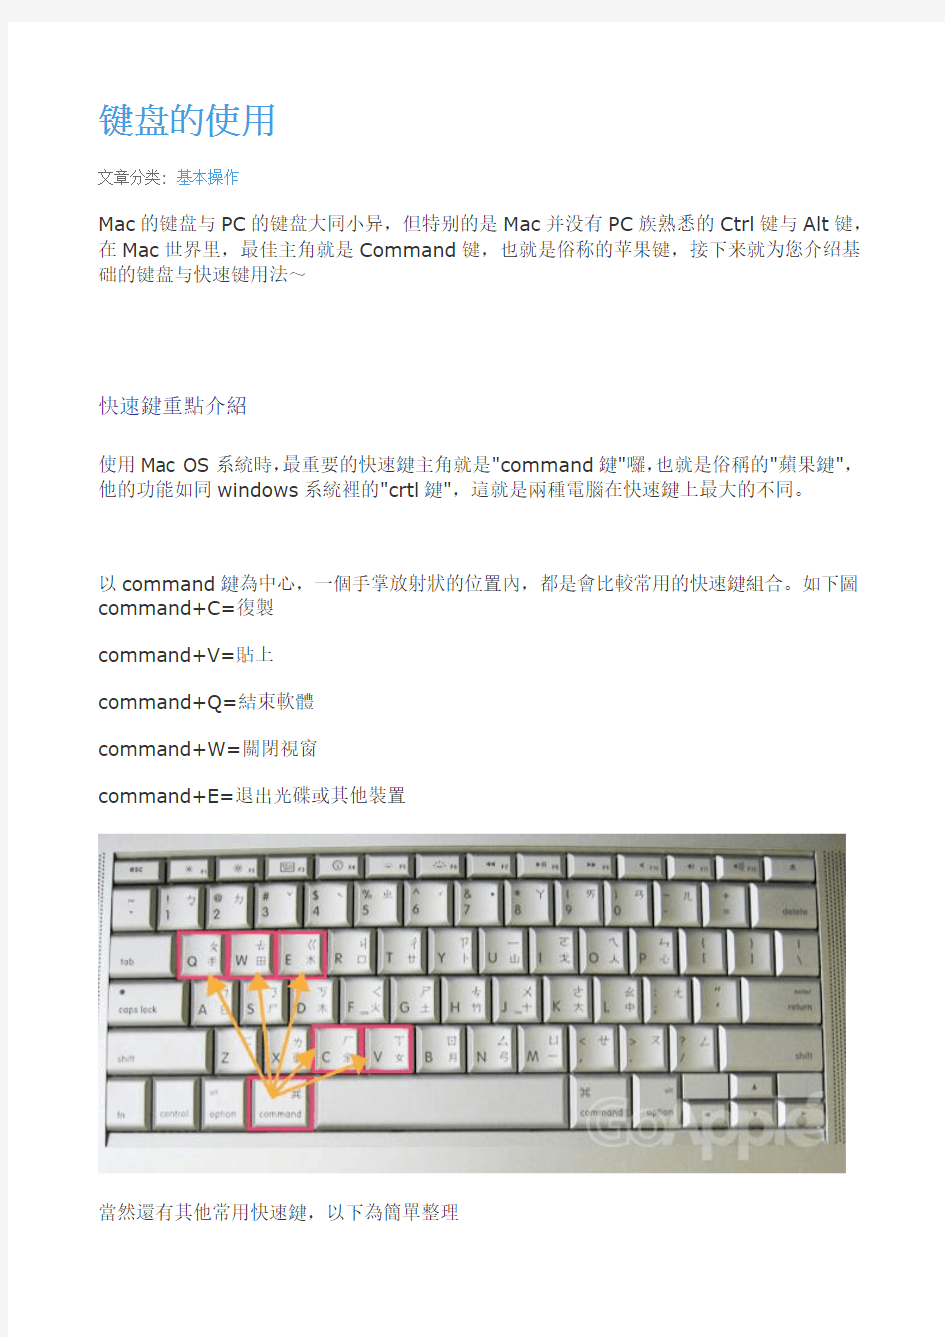 MacPro苹果电脑键盘快捷键使用